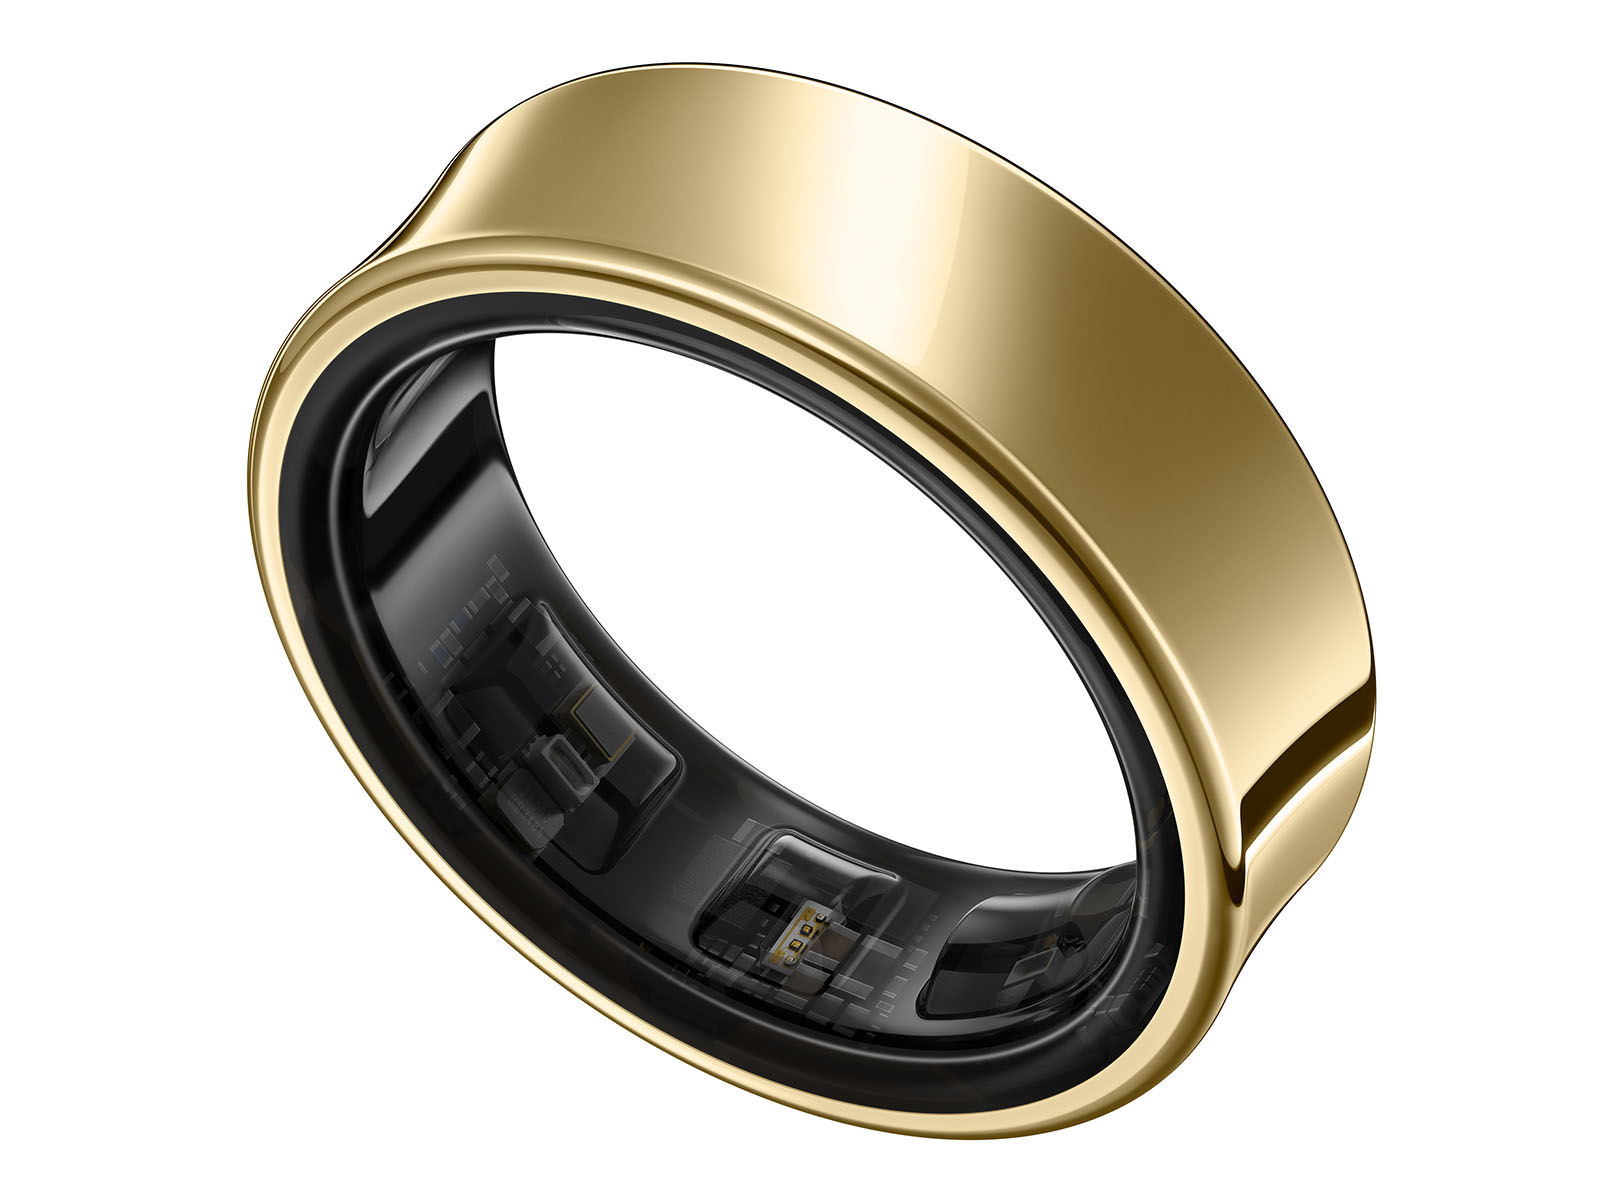 Thumbnail image of Galaxy Ring, Size 8, Titanium Gold